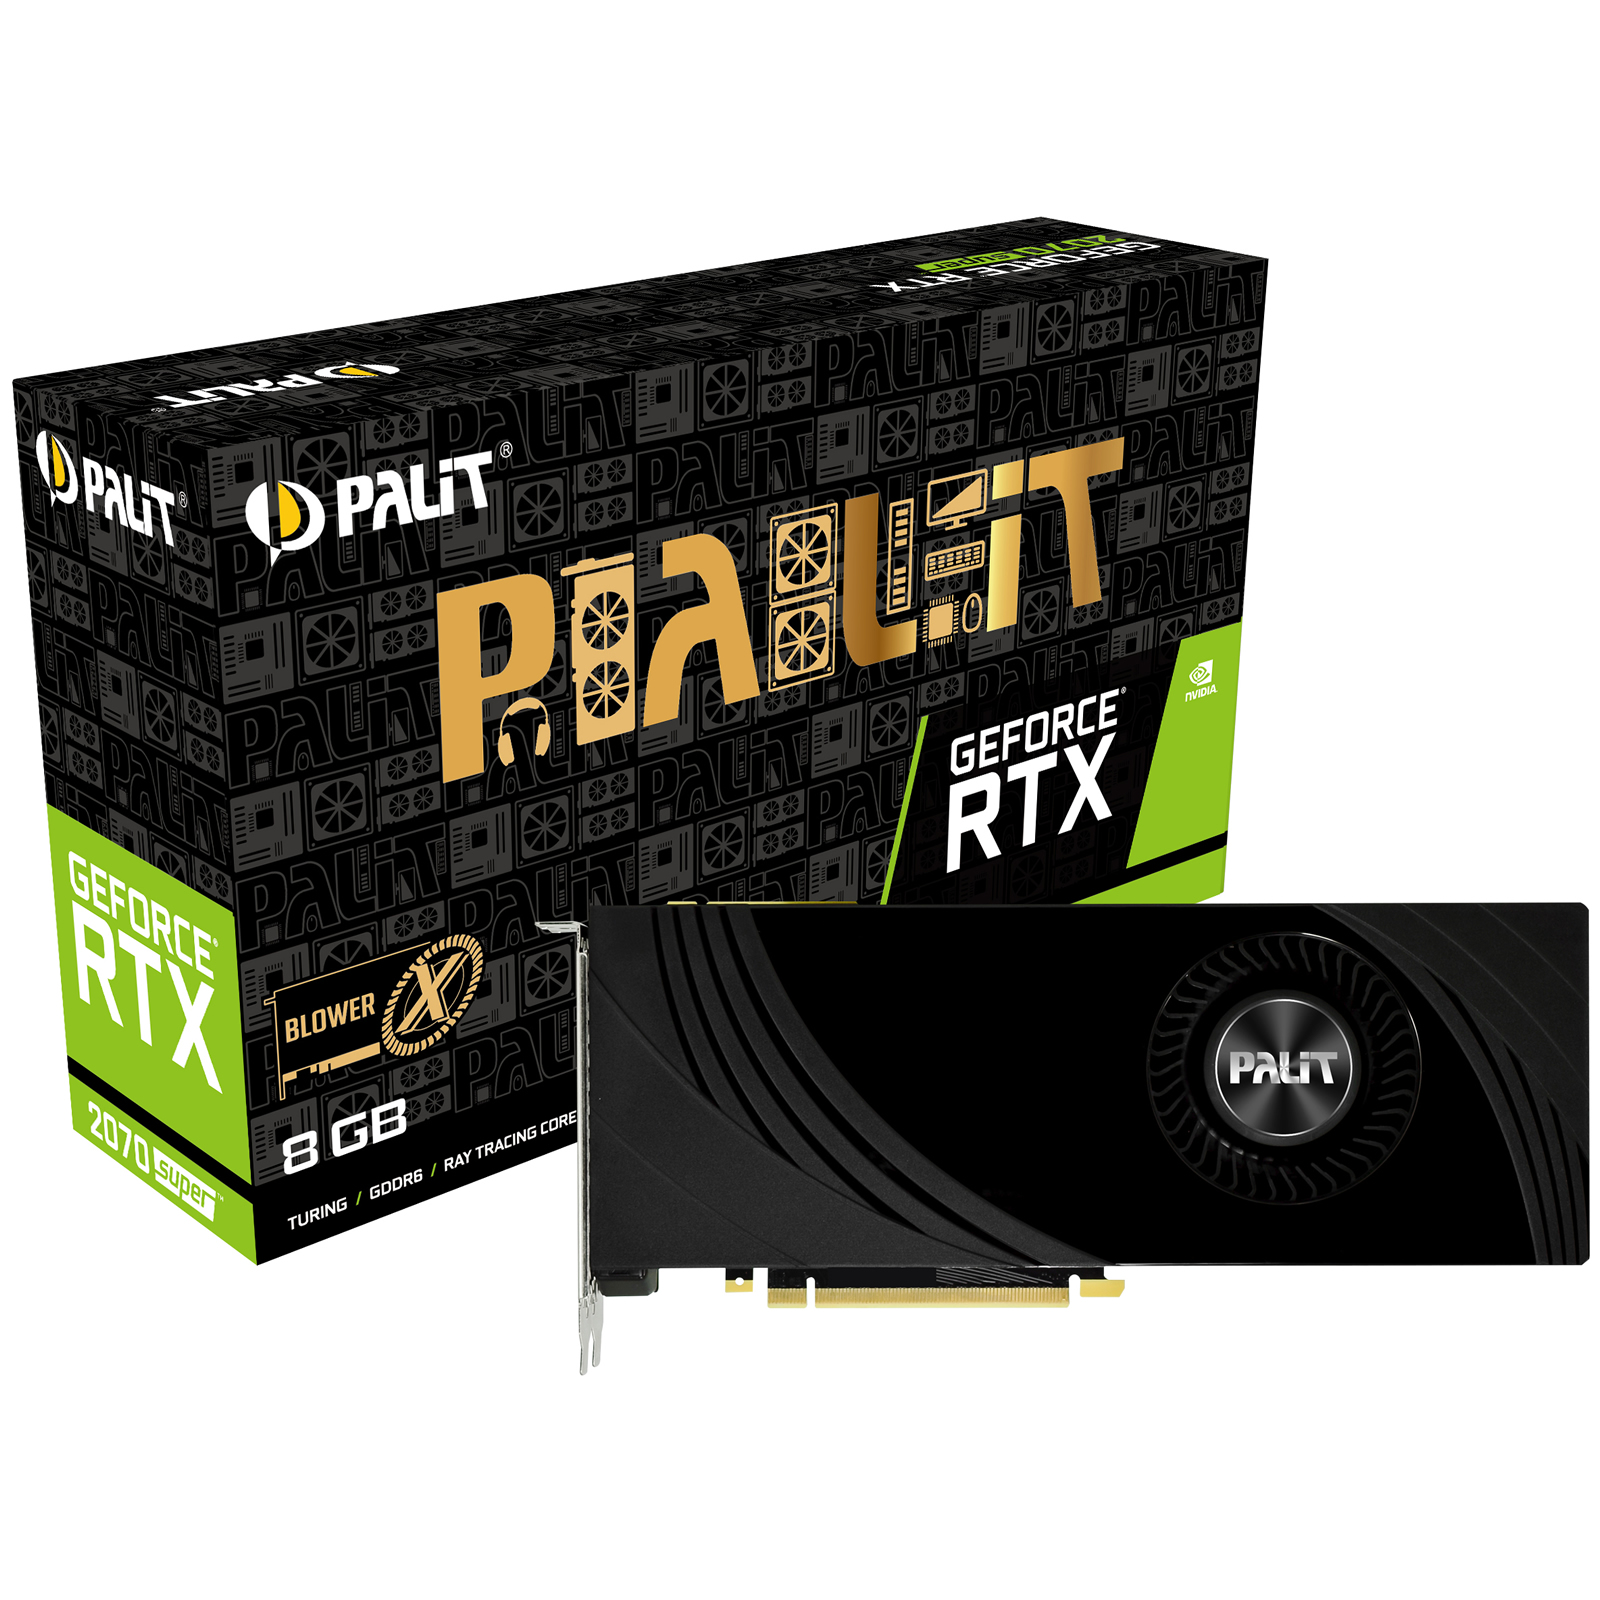 Palit GeForce RTX 2070 SUPER Blower X 8192MB GDDR6 PCI-Express Graphics Card